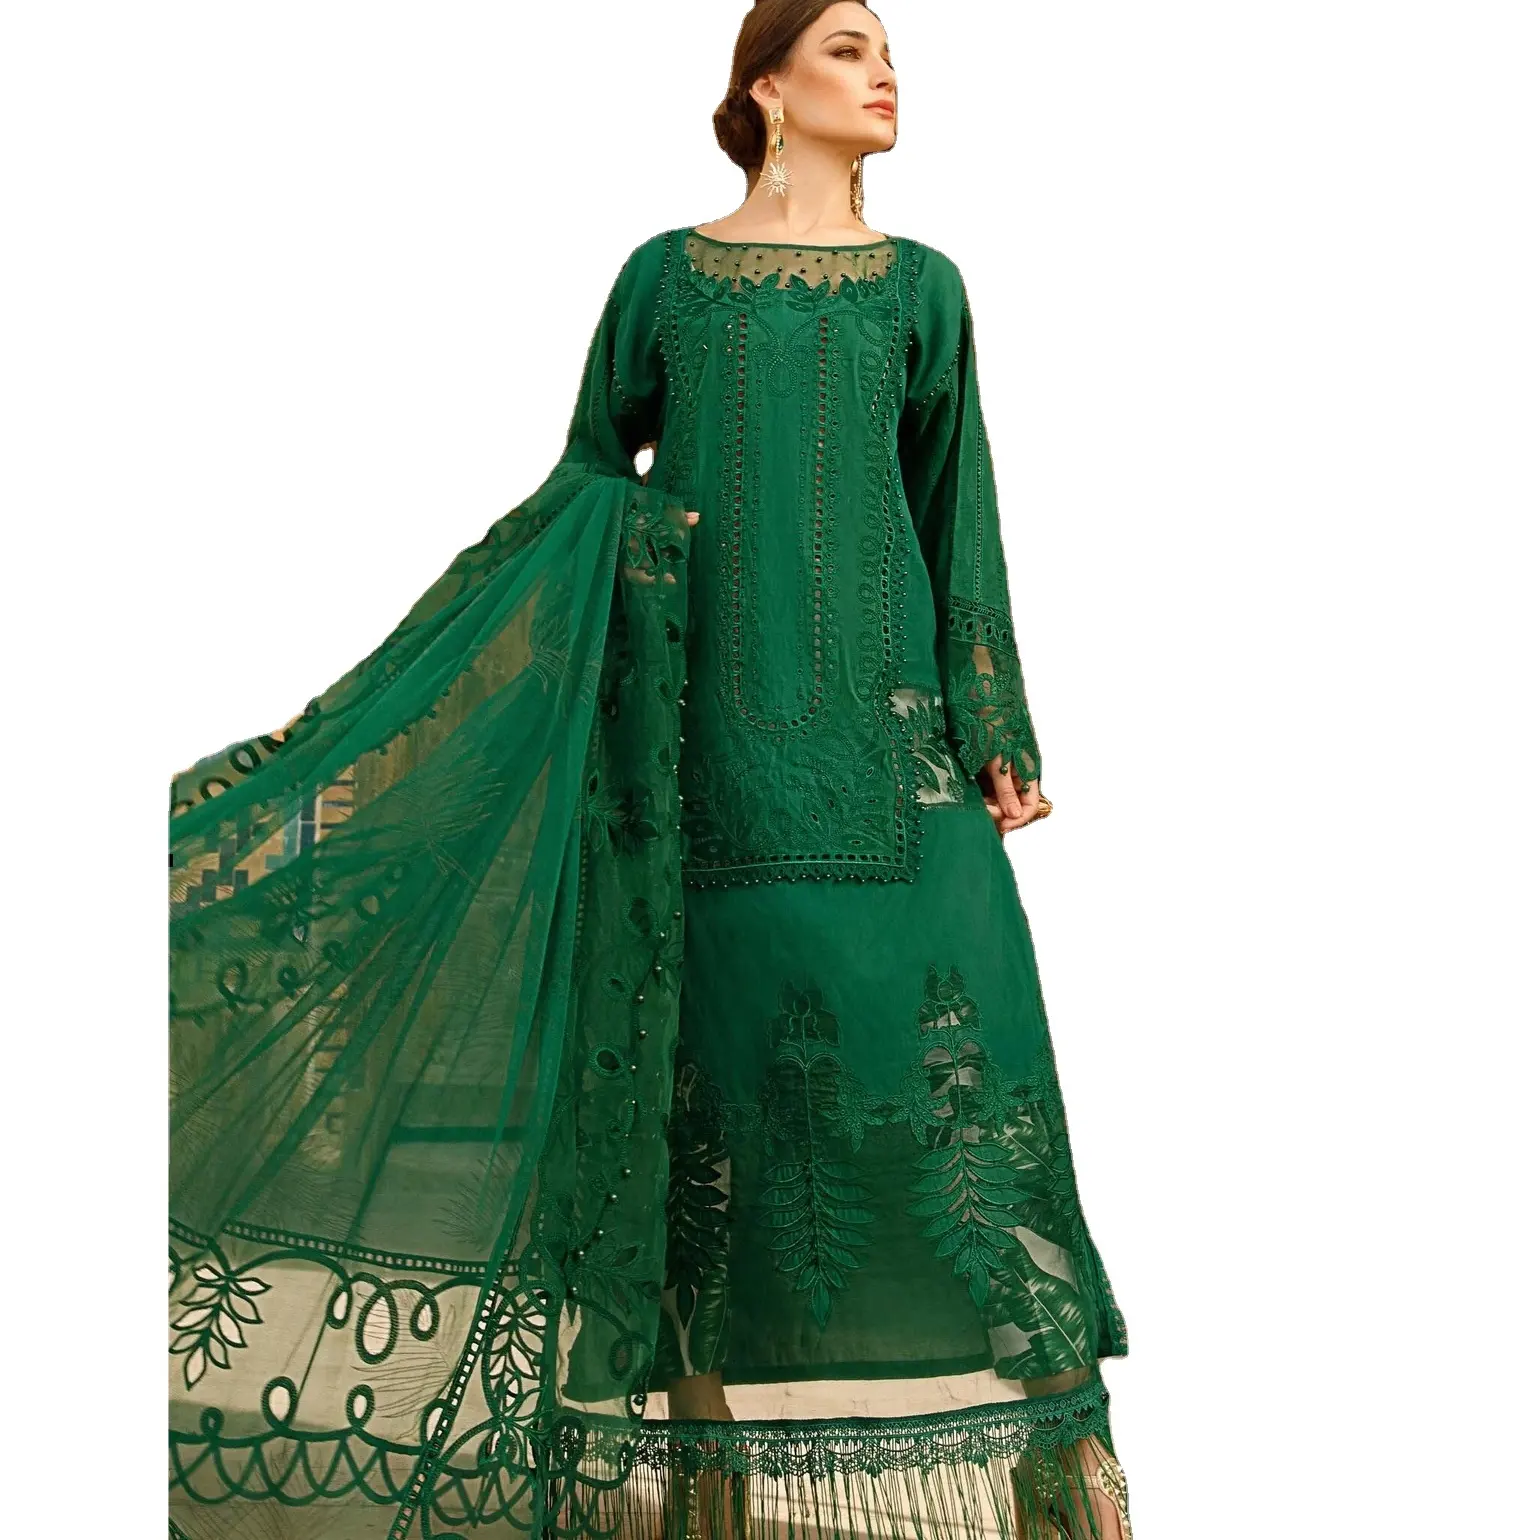 Gaun rumput mewah bermerek Pakistan India setelan bordir kualitas ekspor gaun pesta pernikahan Formal penjualan terbaik